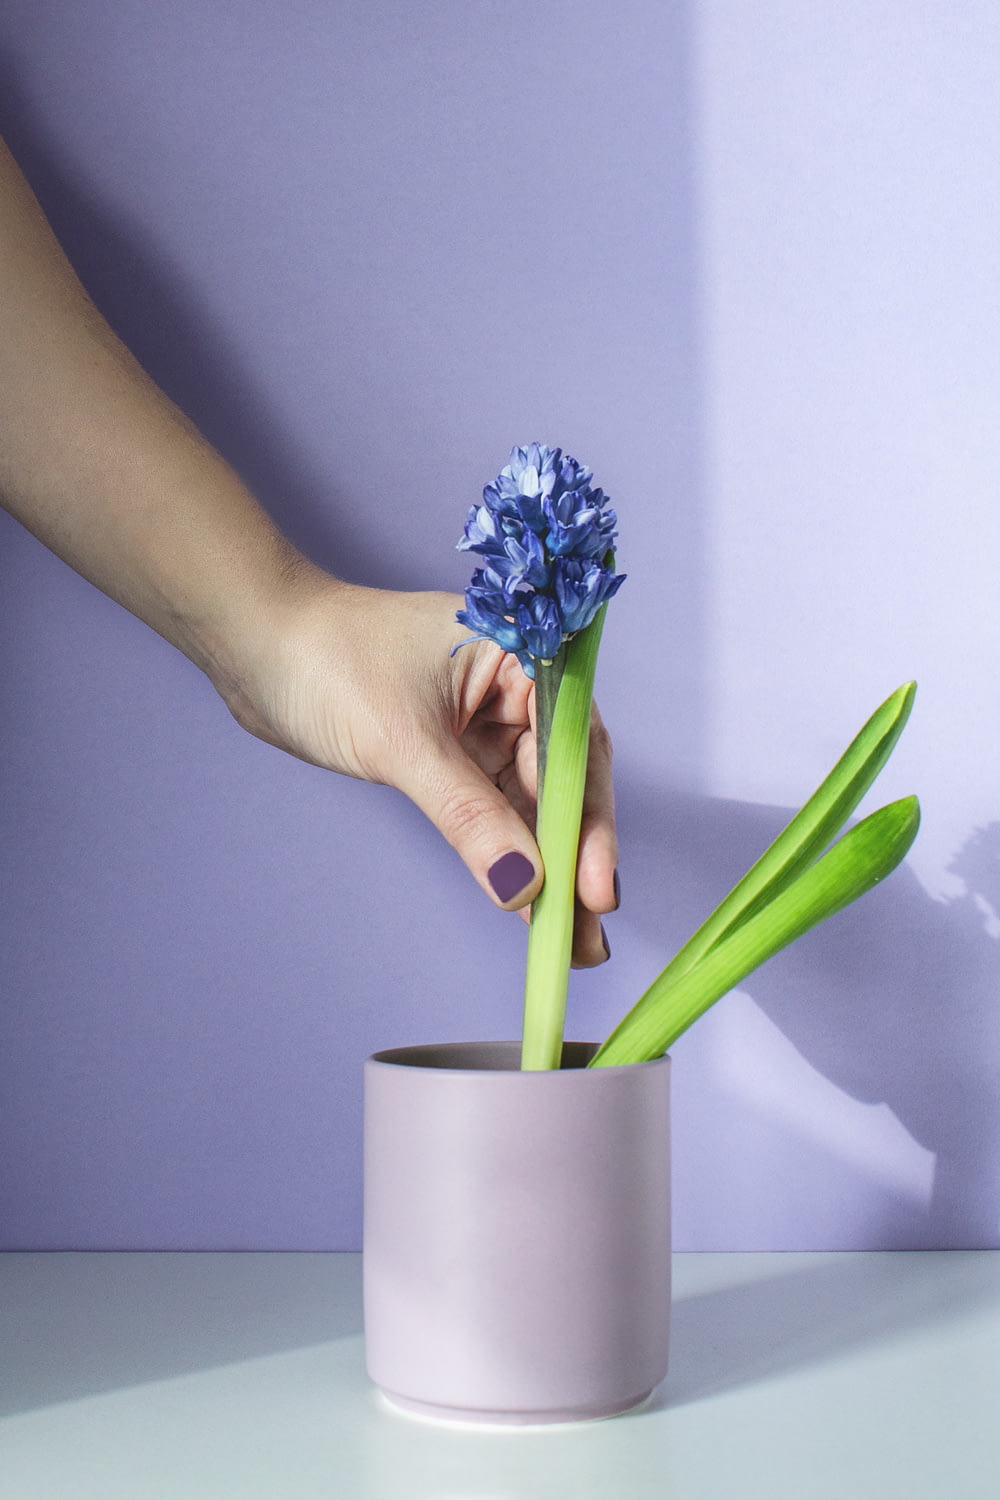 a hand holding a blue flower